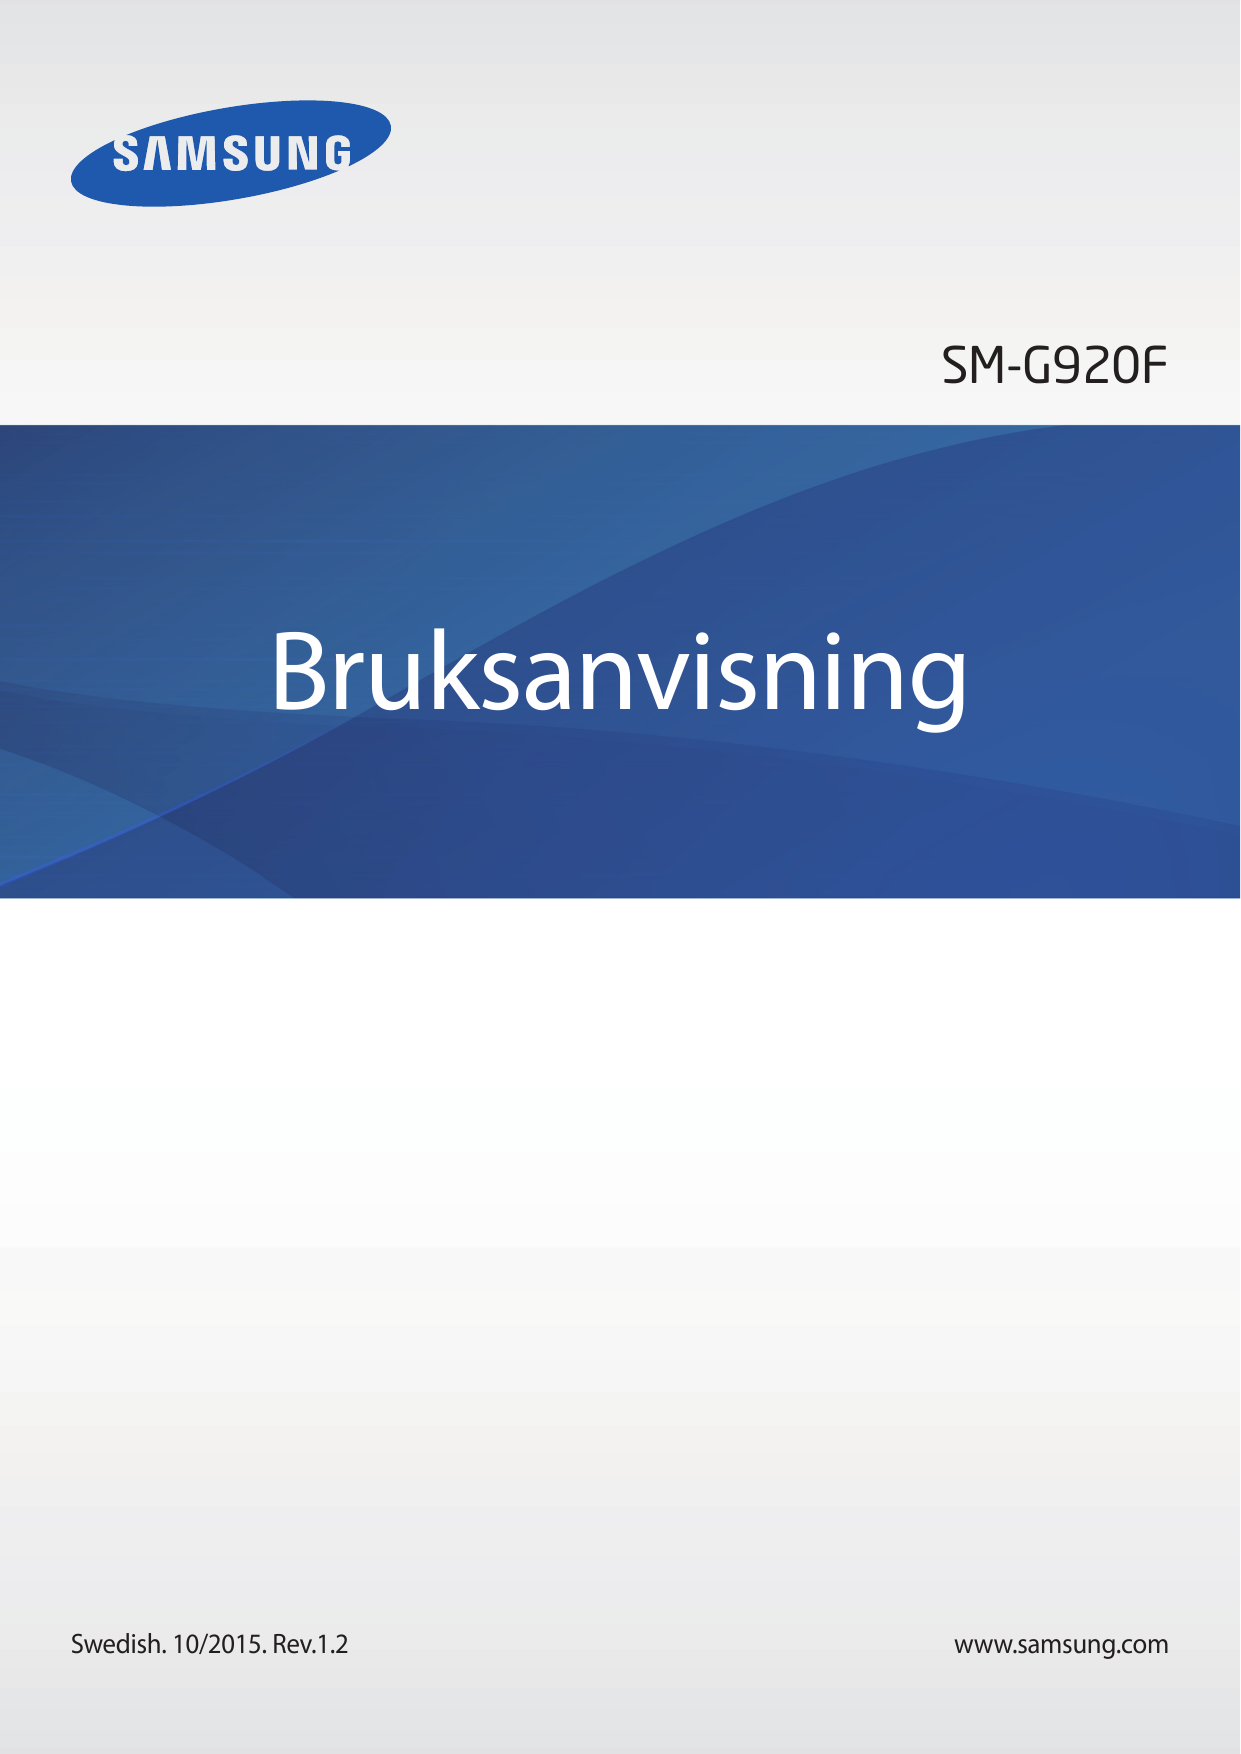 SM-G920FBruksanvisningSwedish. 10/2015. Rev.1.2www.samsung.com